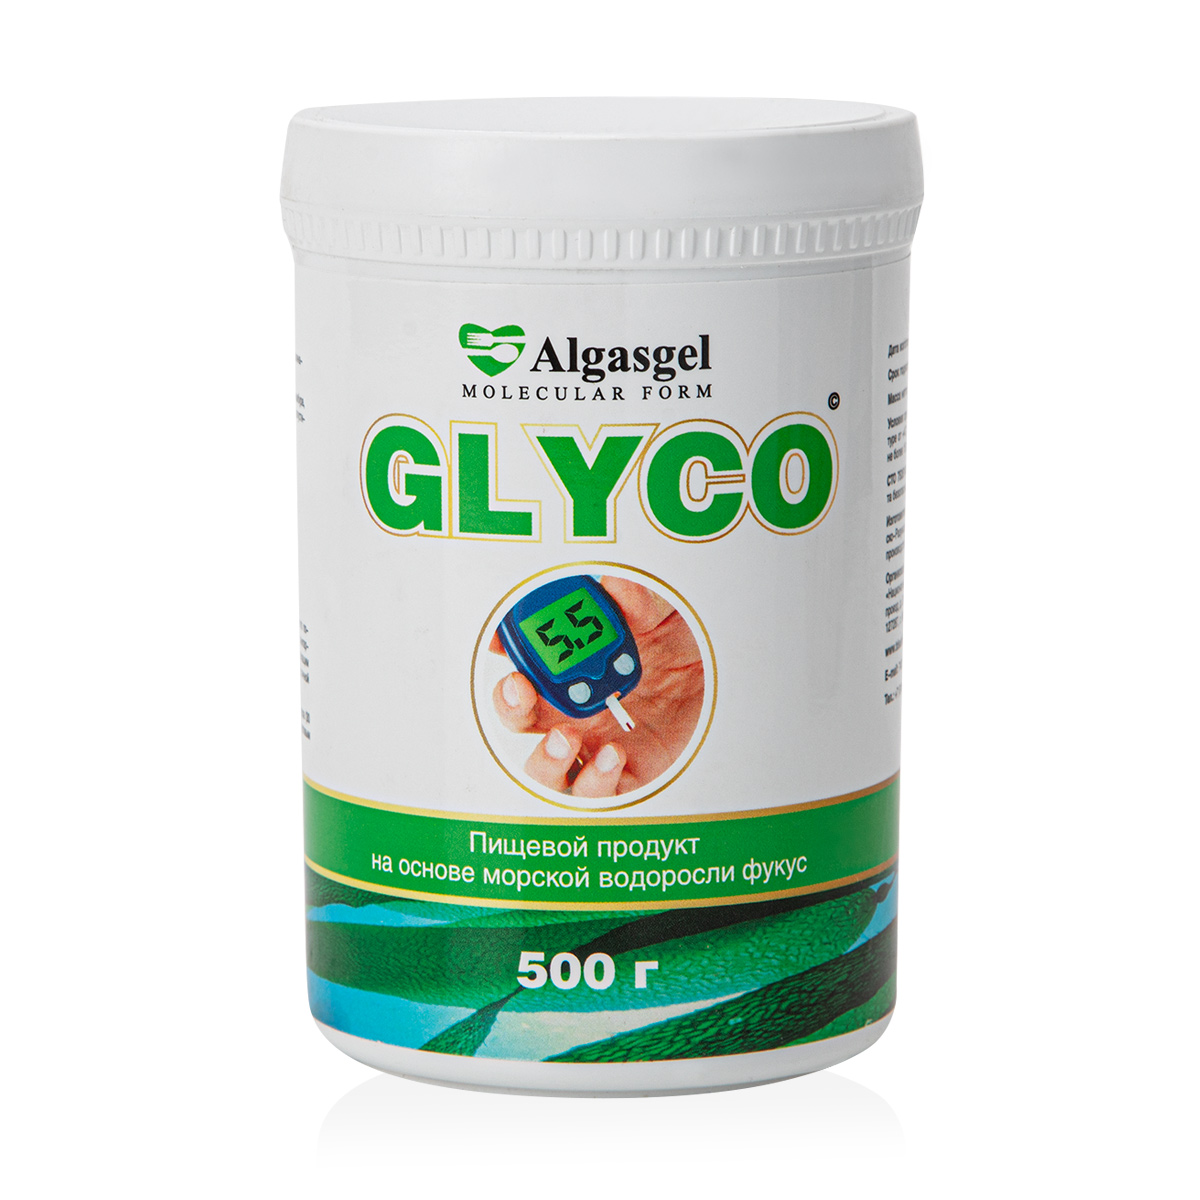 Algasgel Glyco, пищевой продукт при сахарном диабете II типа, метаболическом синдроме, гипотиреозе (500 г)